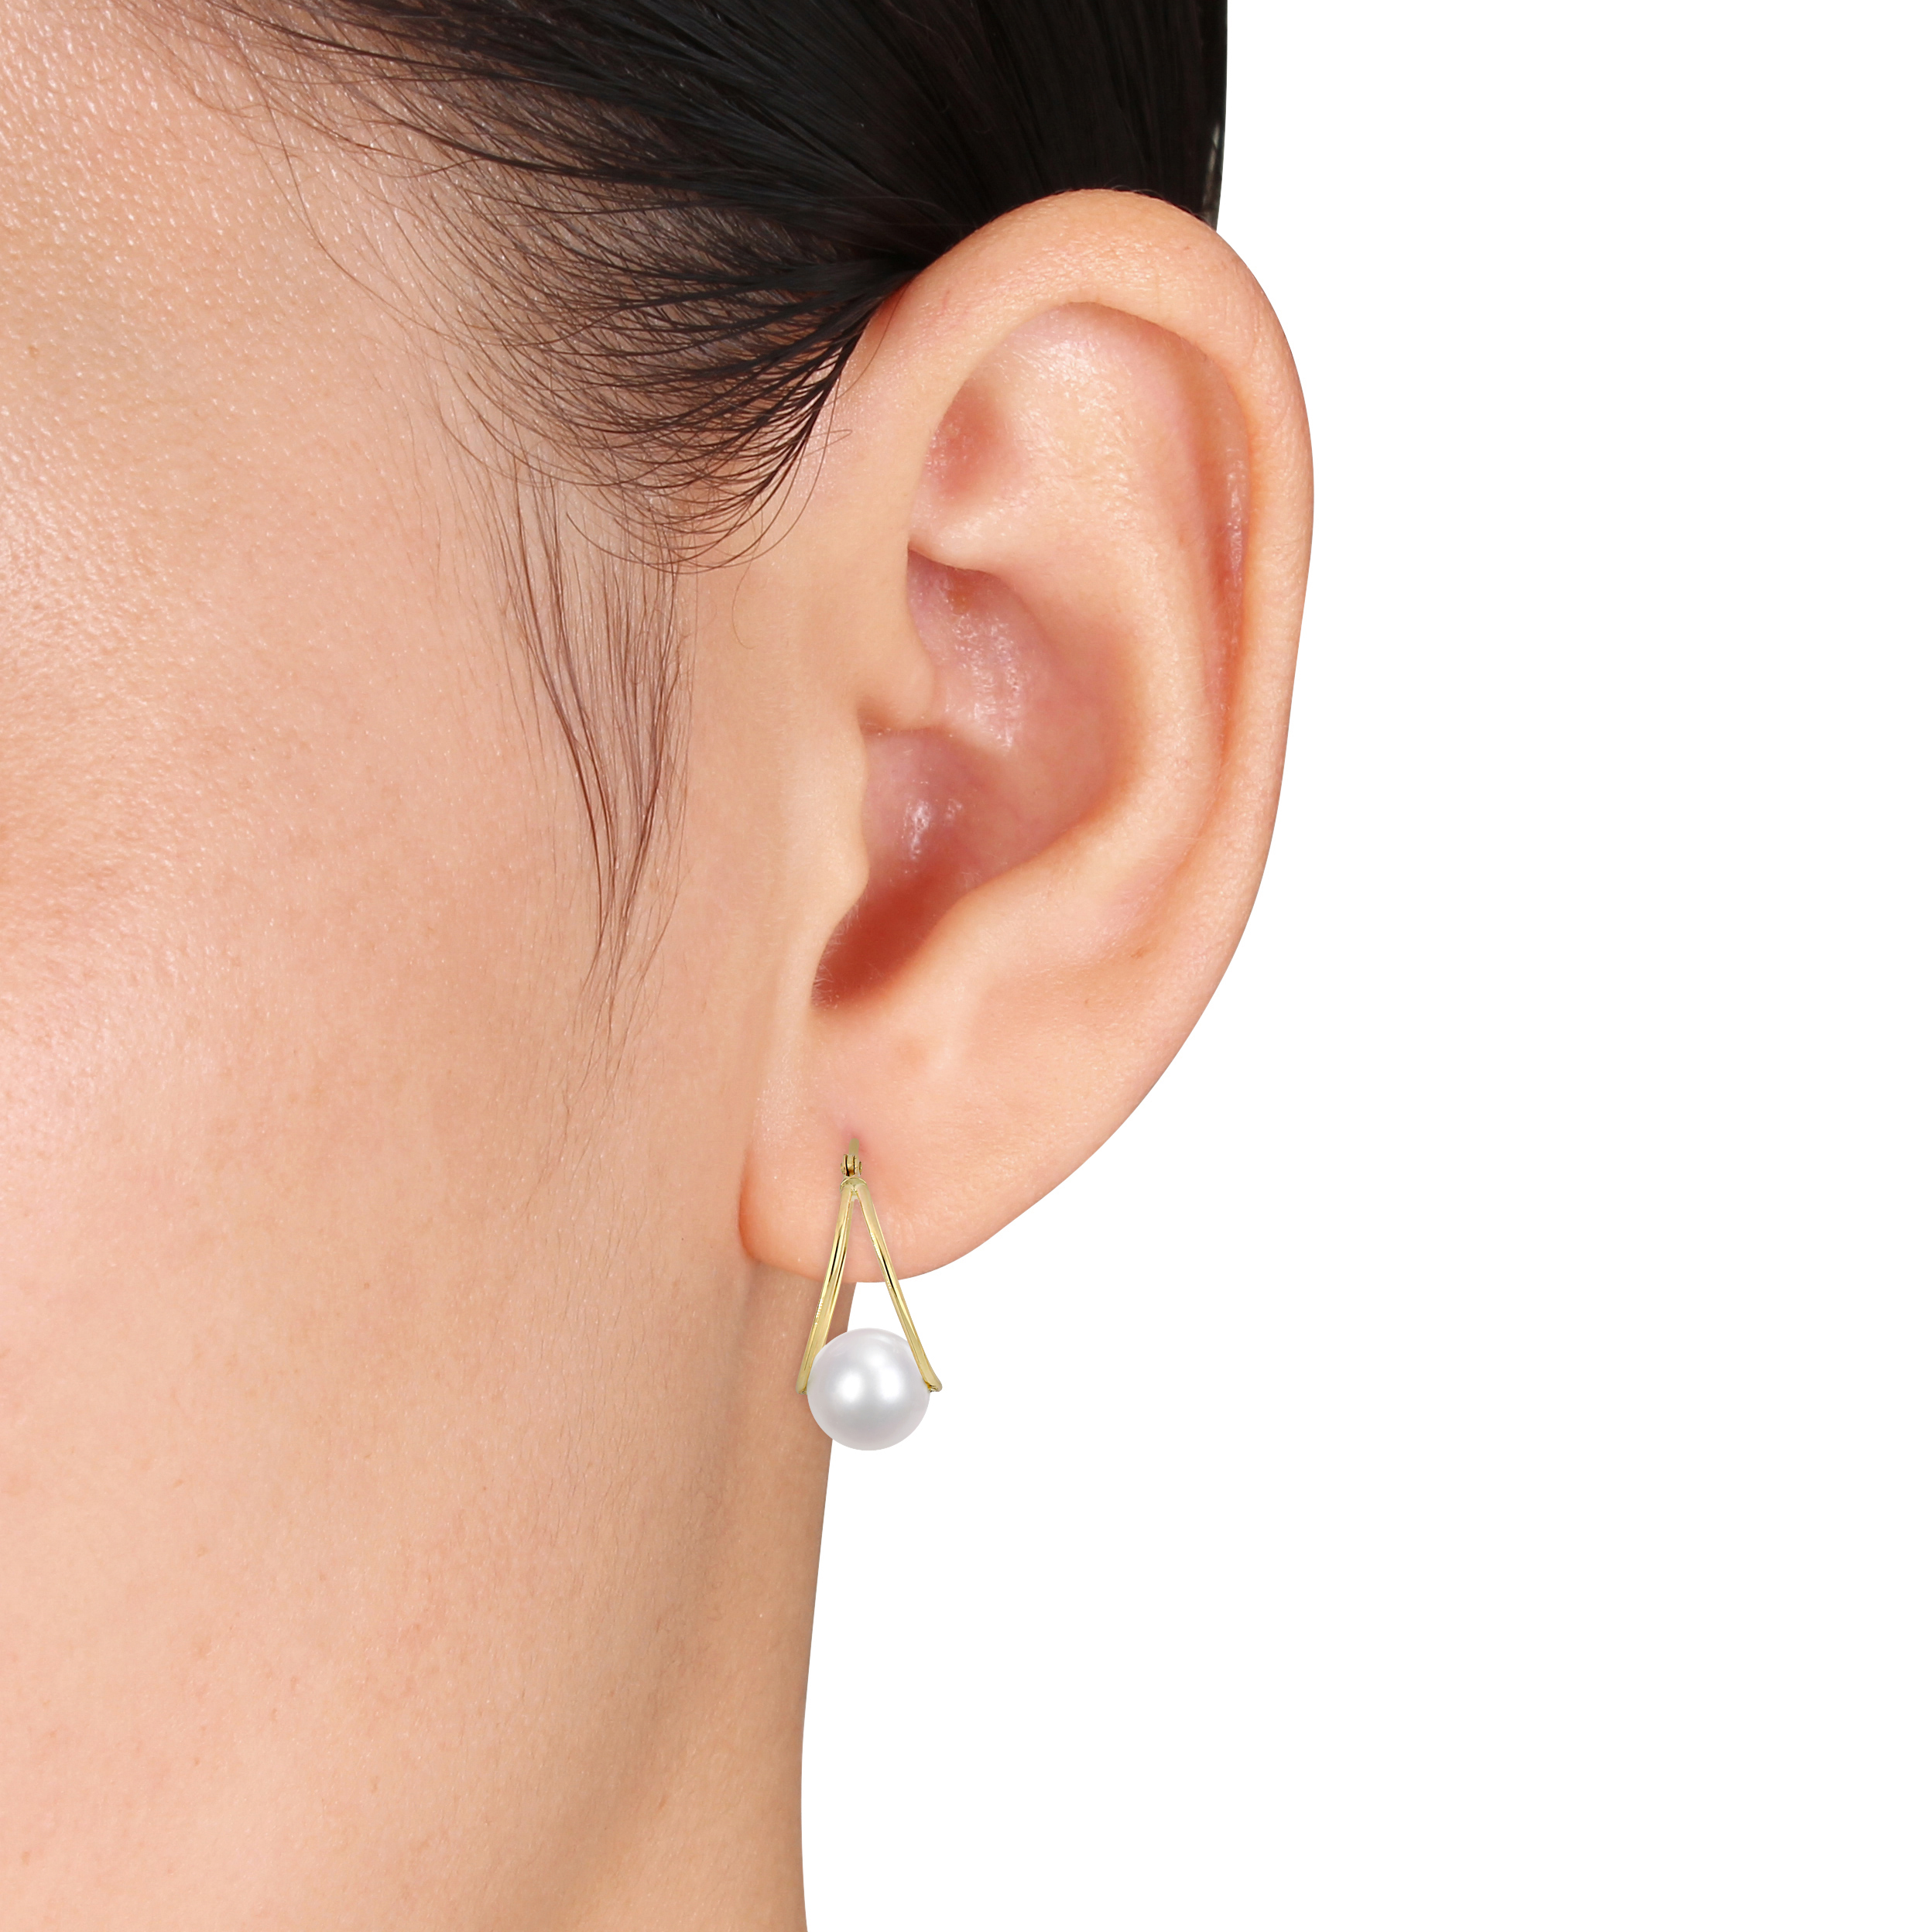 8 - 8.5 MM Cultured Freshwater Pearl Drop Earrings in 10k White Gold